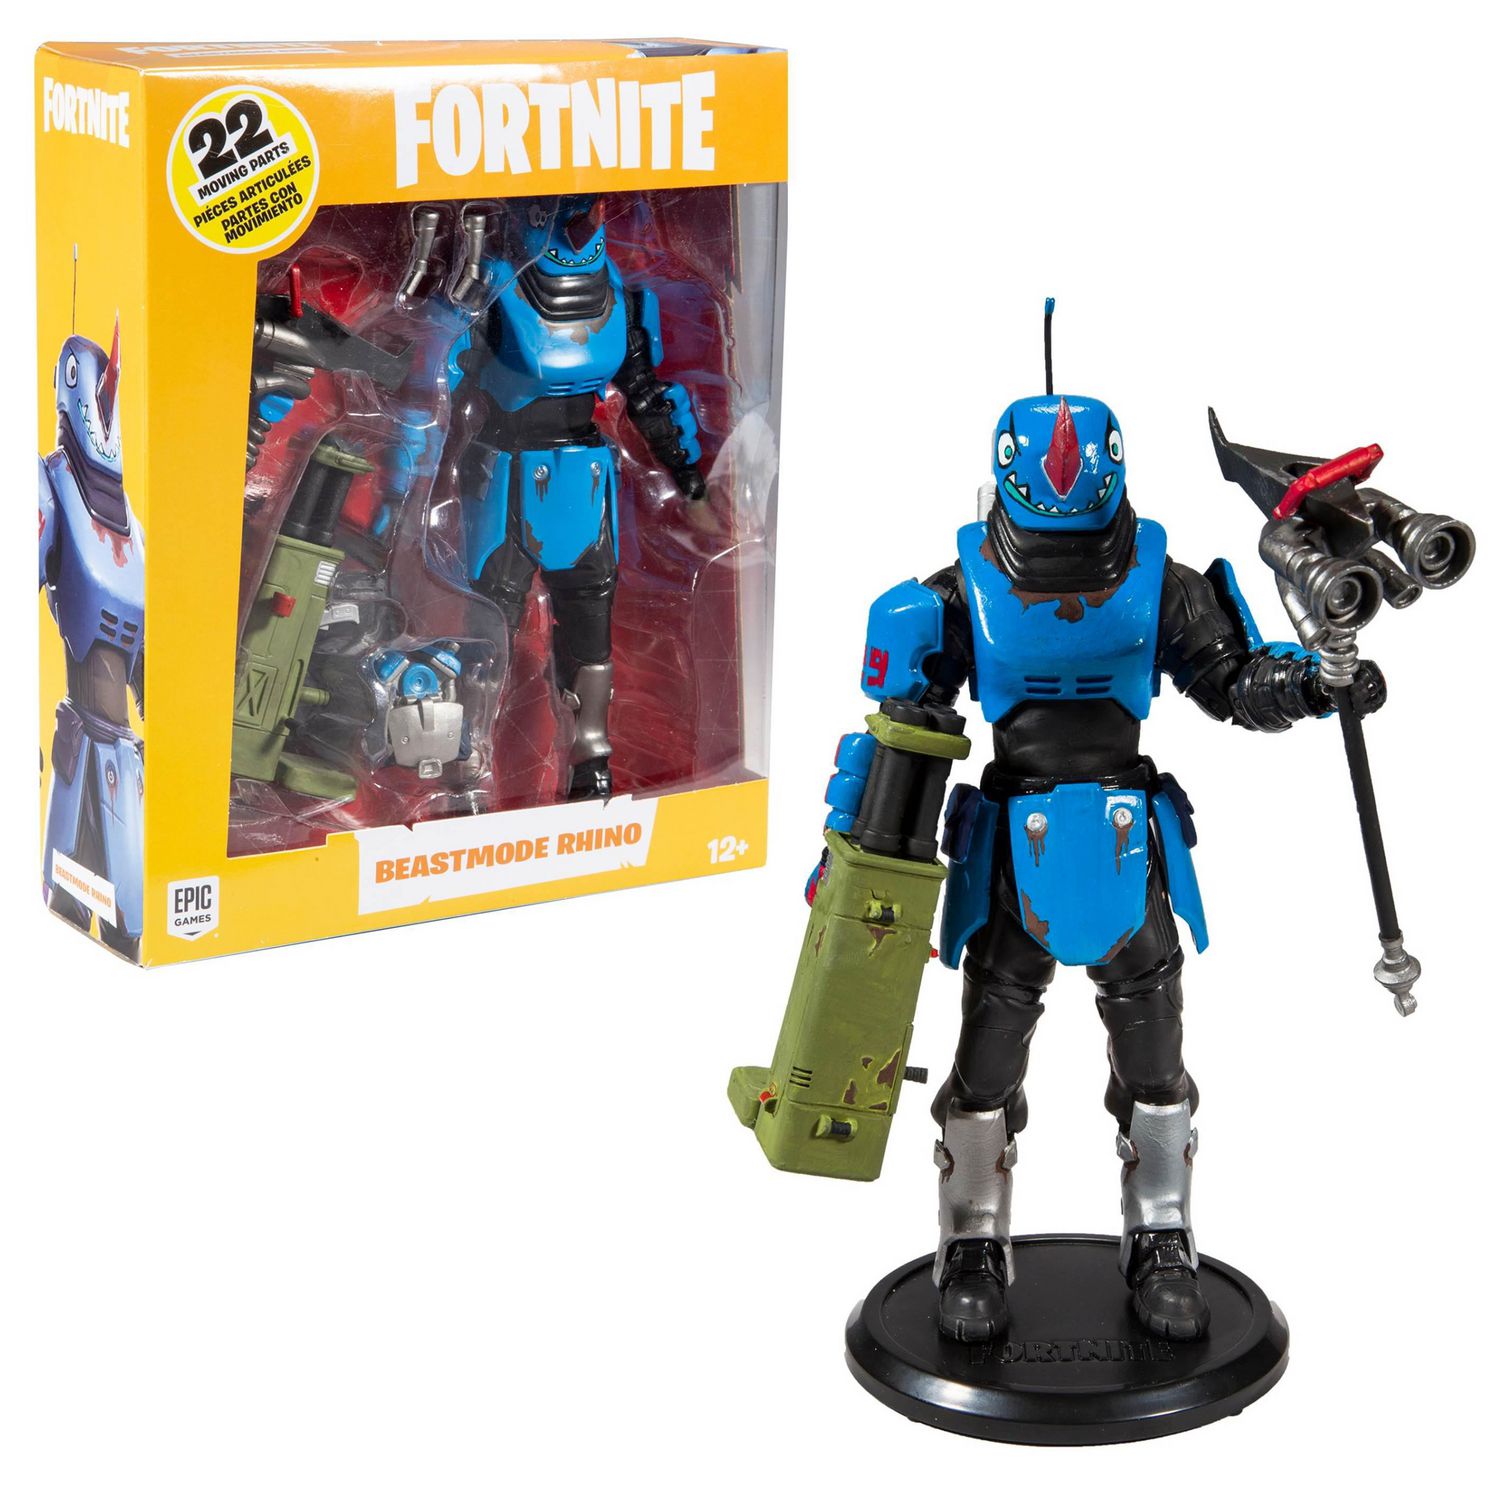 McFarlane Toys Fortnite Beastmode Rhino 7 Inch Action Figure MISB for sale online 